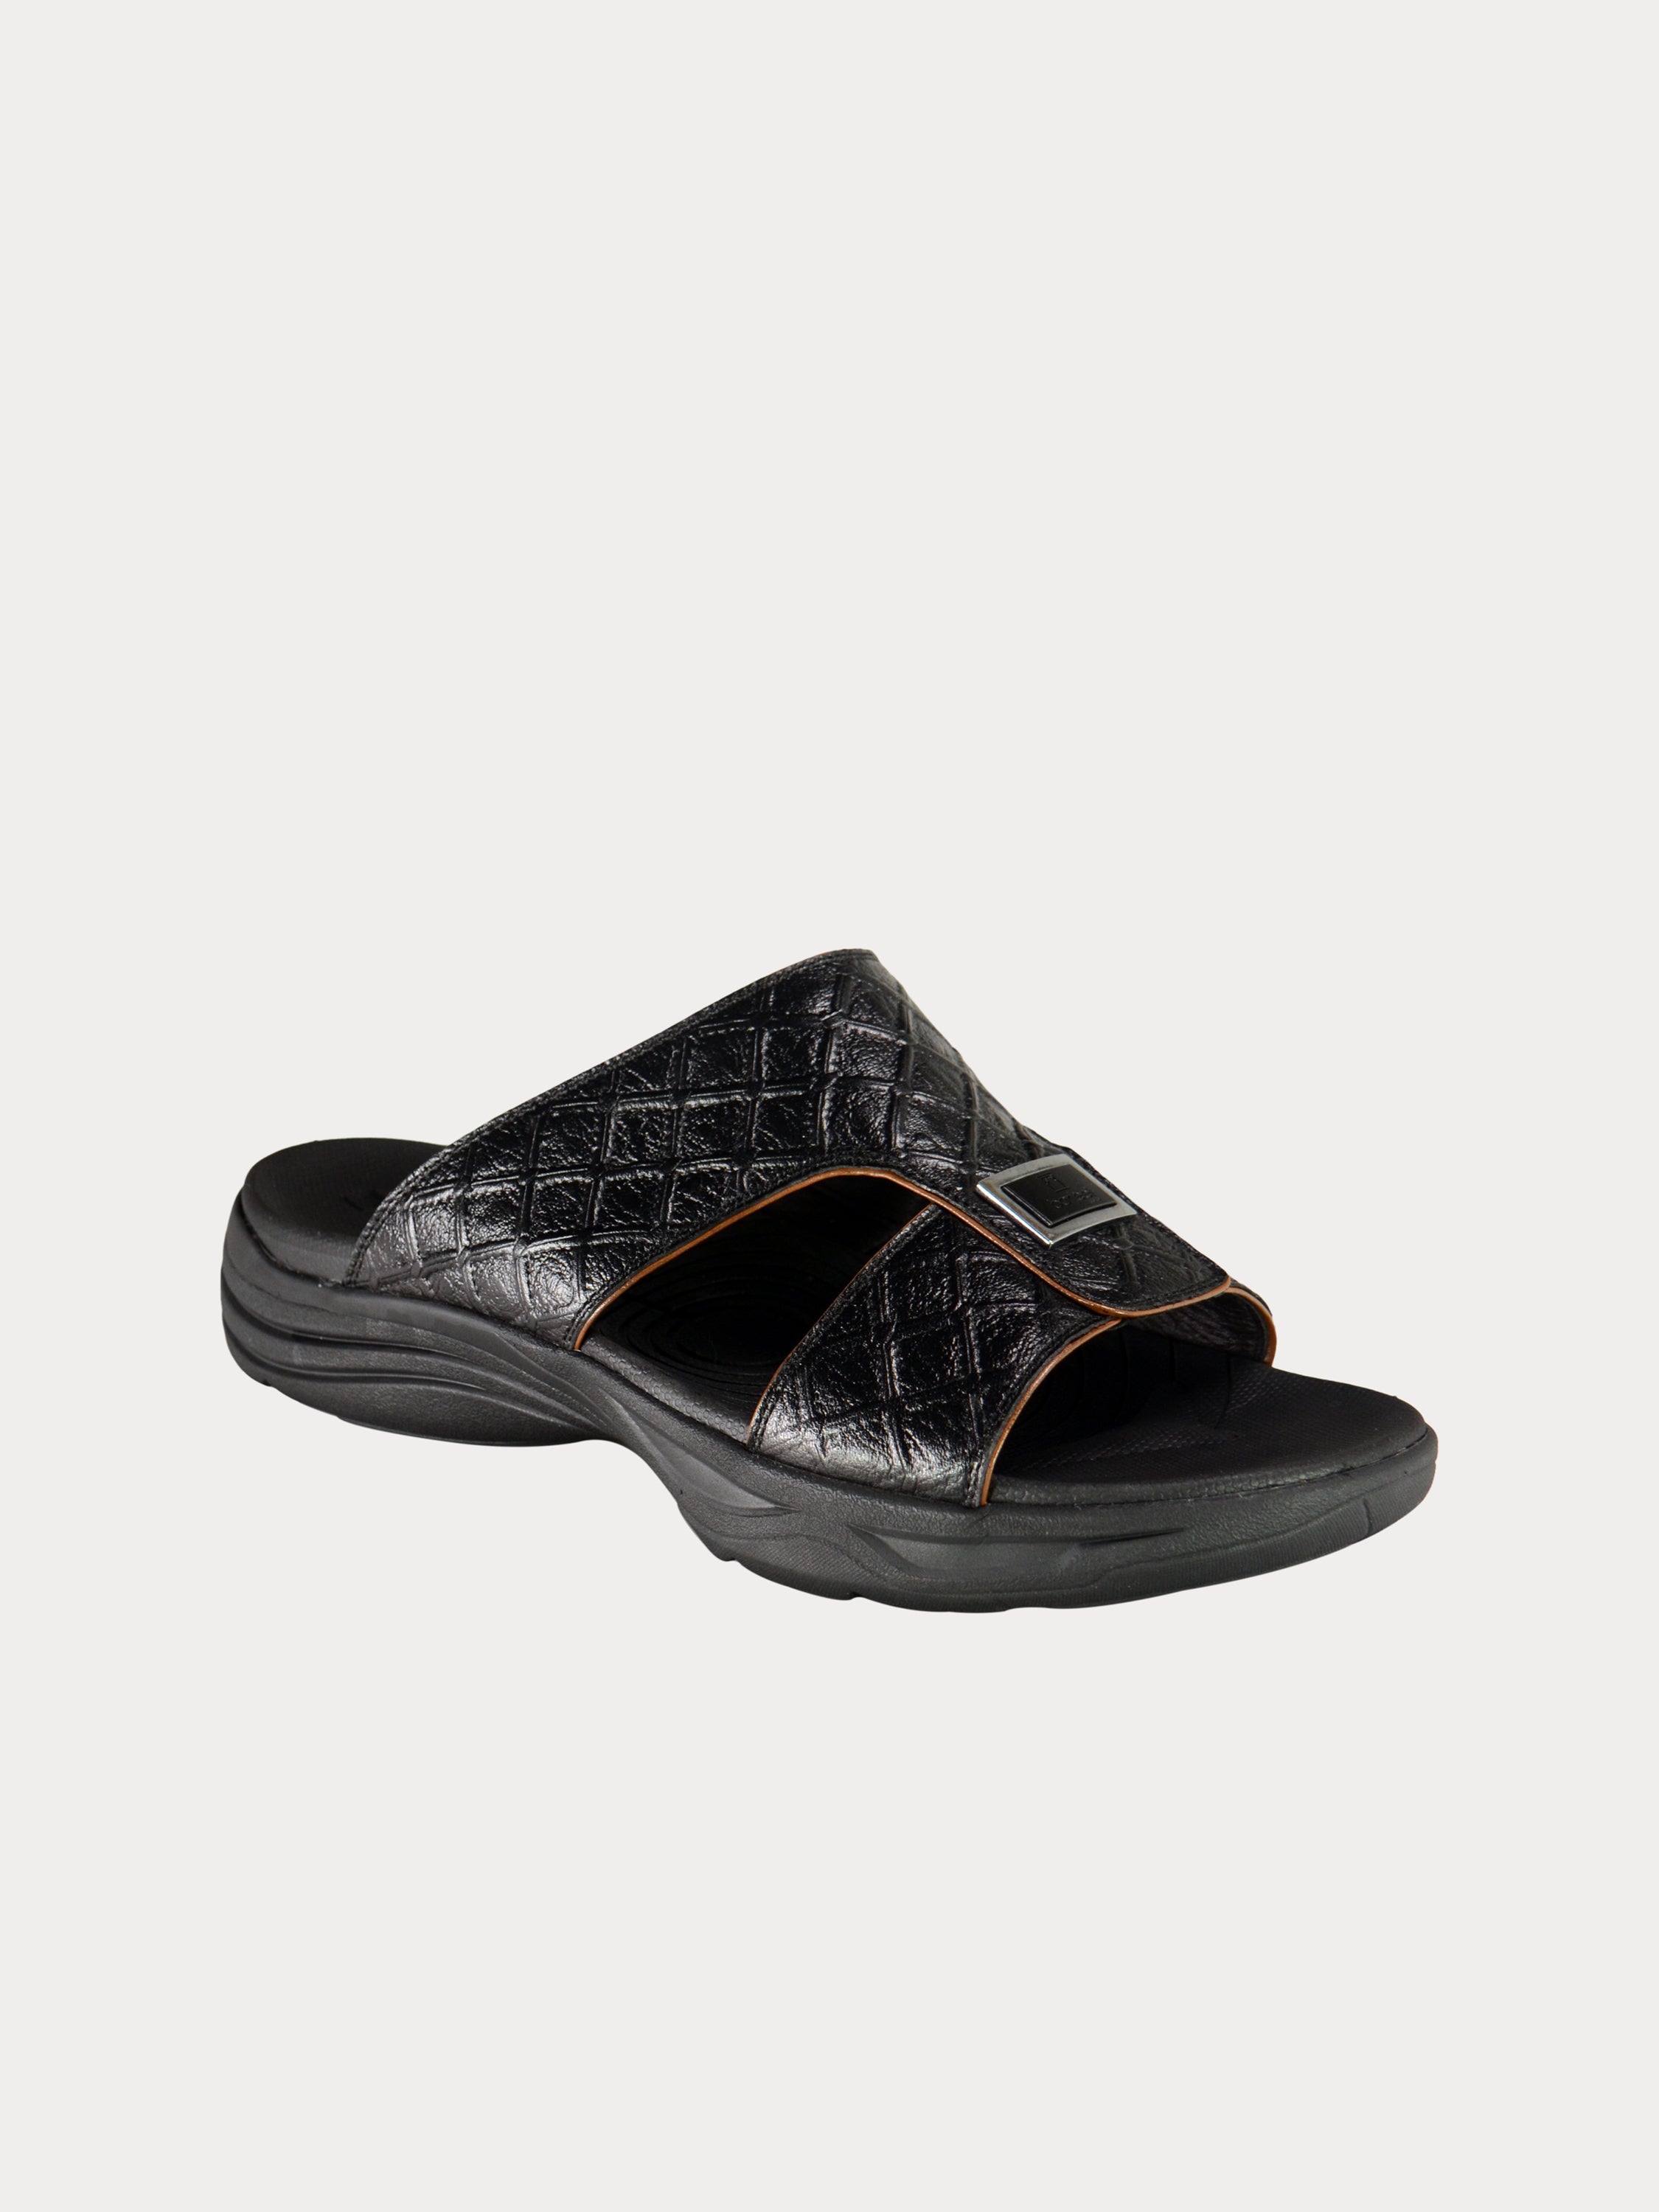 Barjeel Uno D197154 Men's Arabic Leather Sandals #color_Black